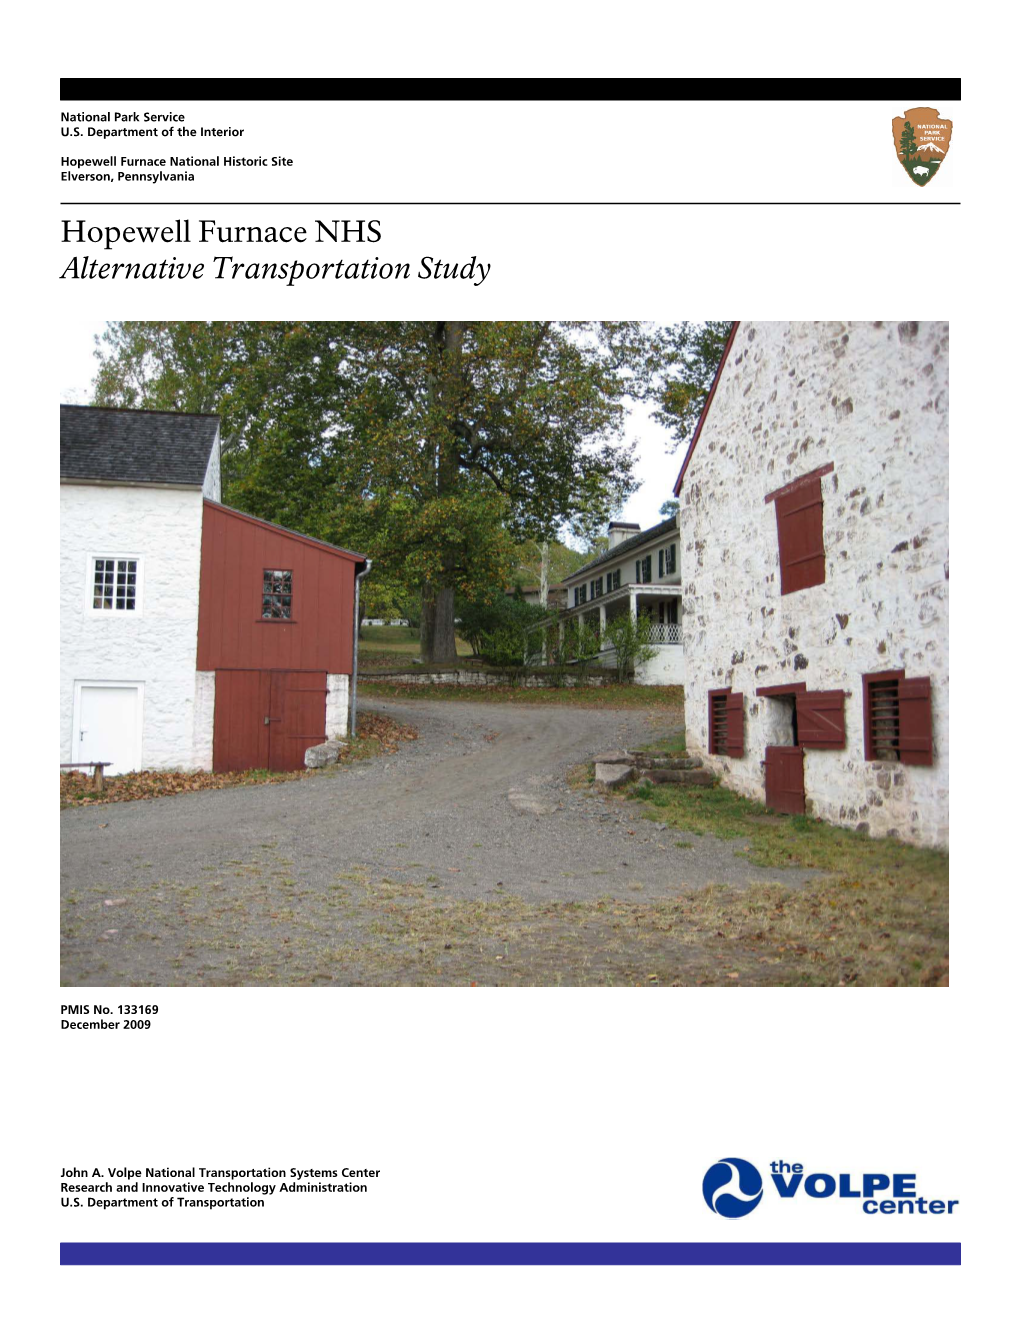 Hopewell Furnace NHS Alternative Transportation Study